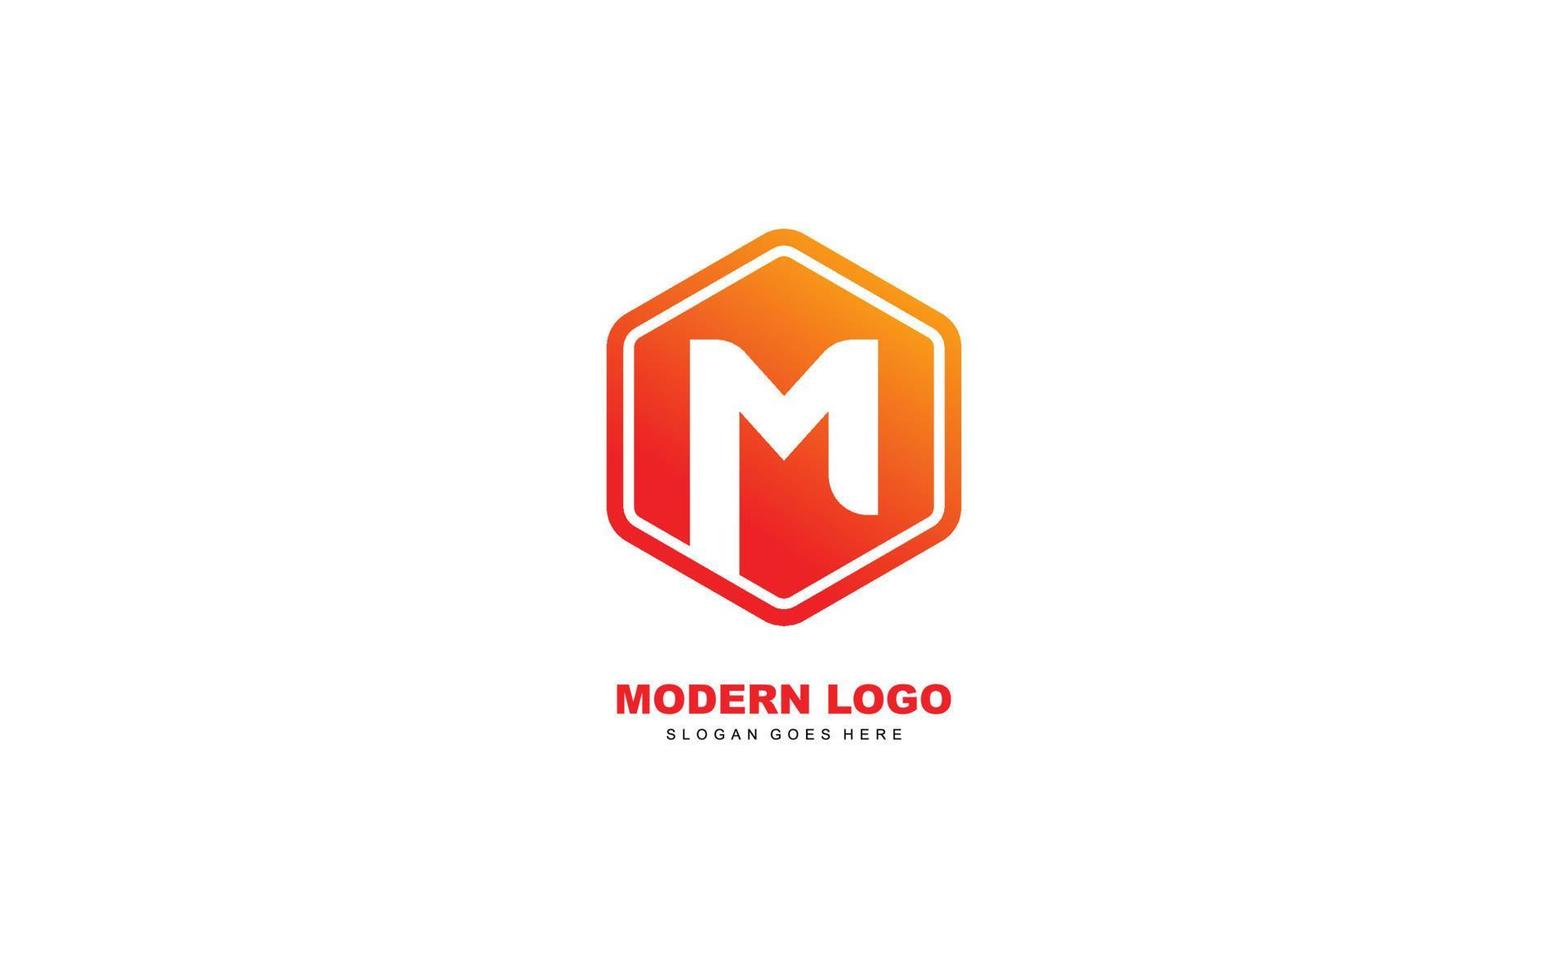 M logo shape for identity. letter template vector illustration for your brand.